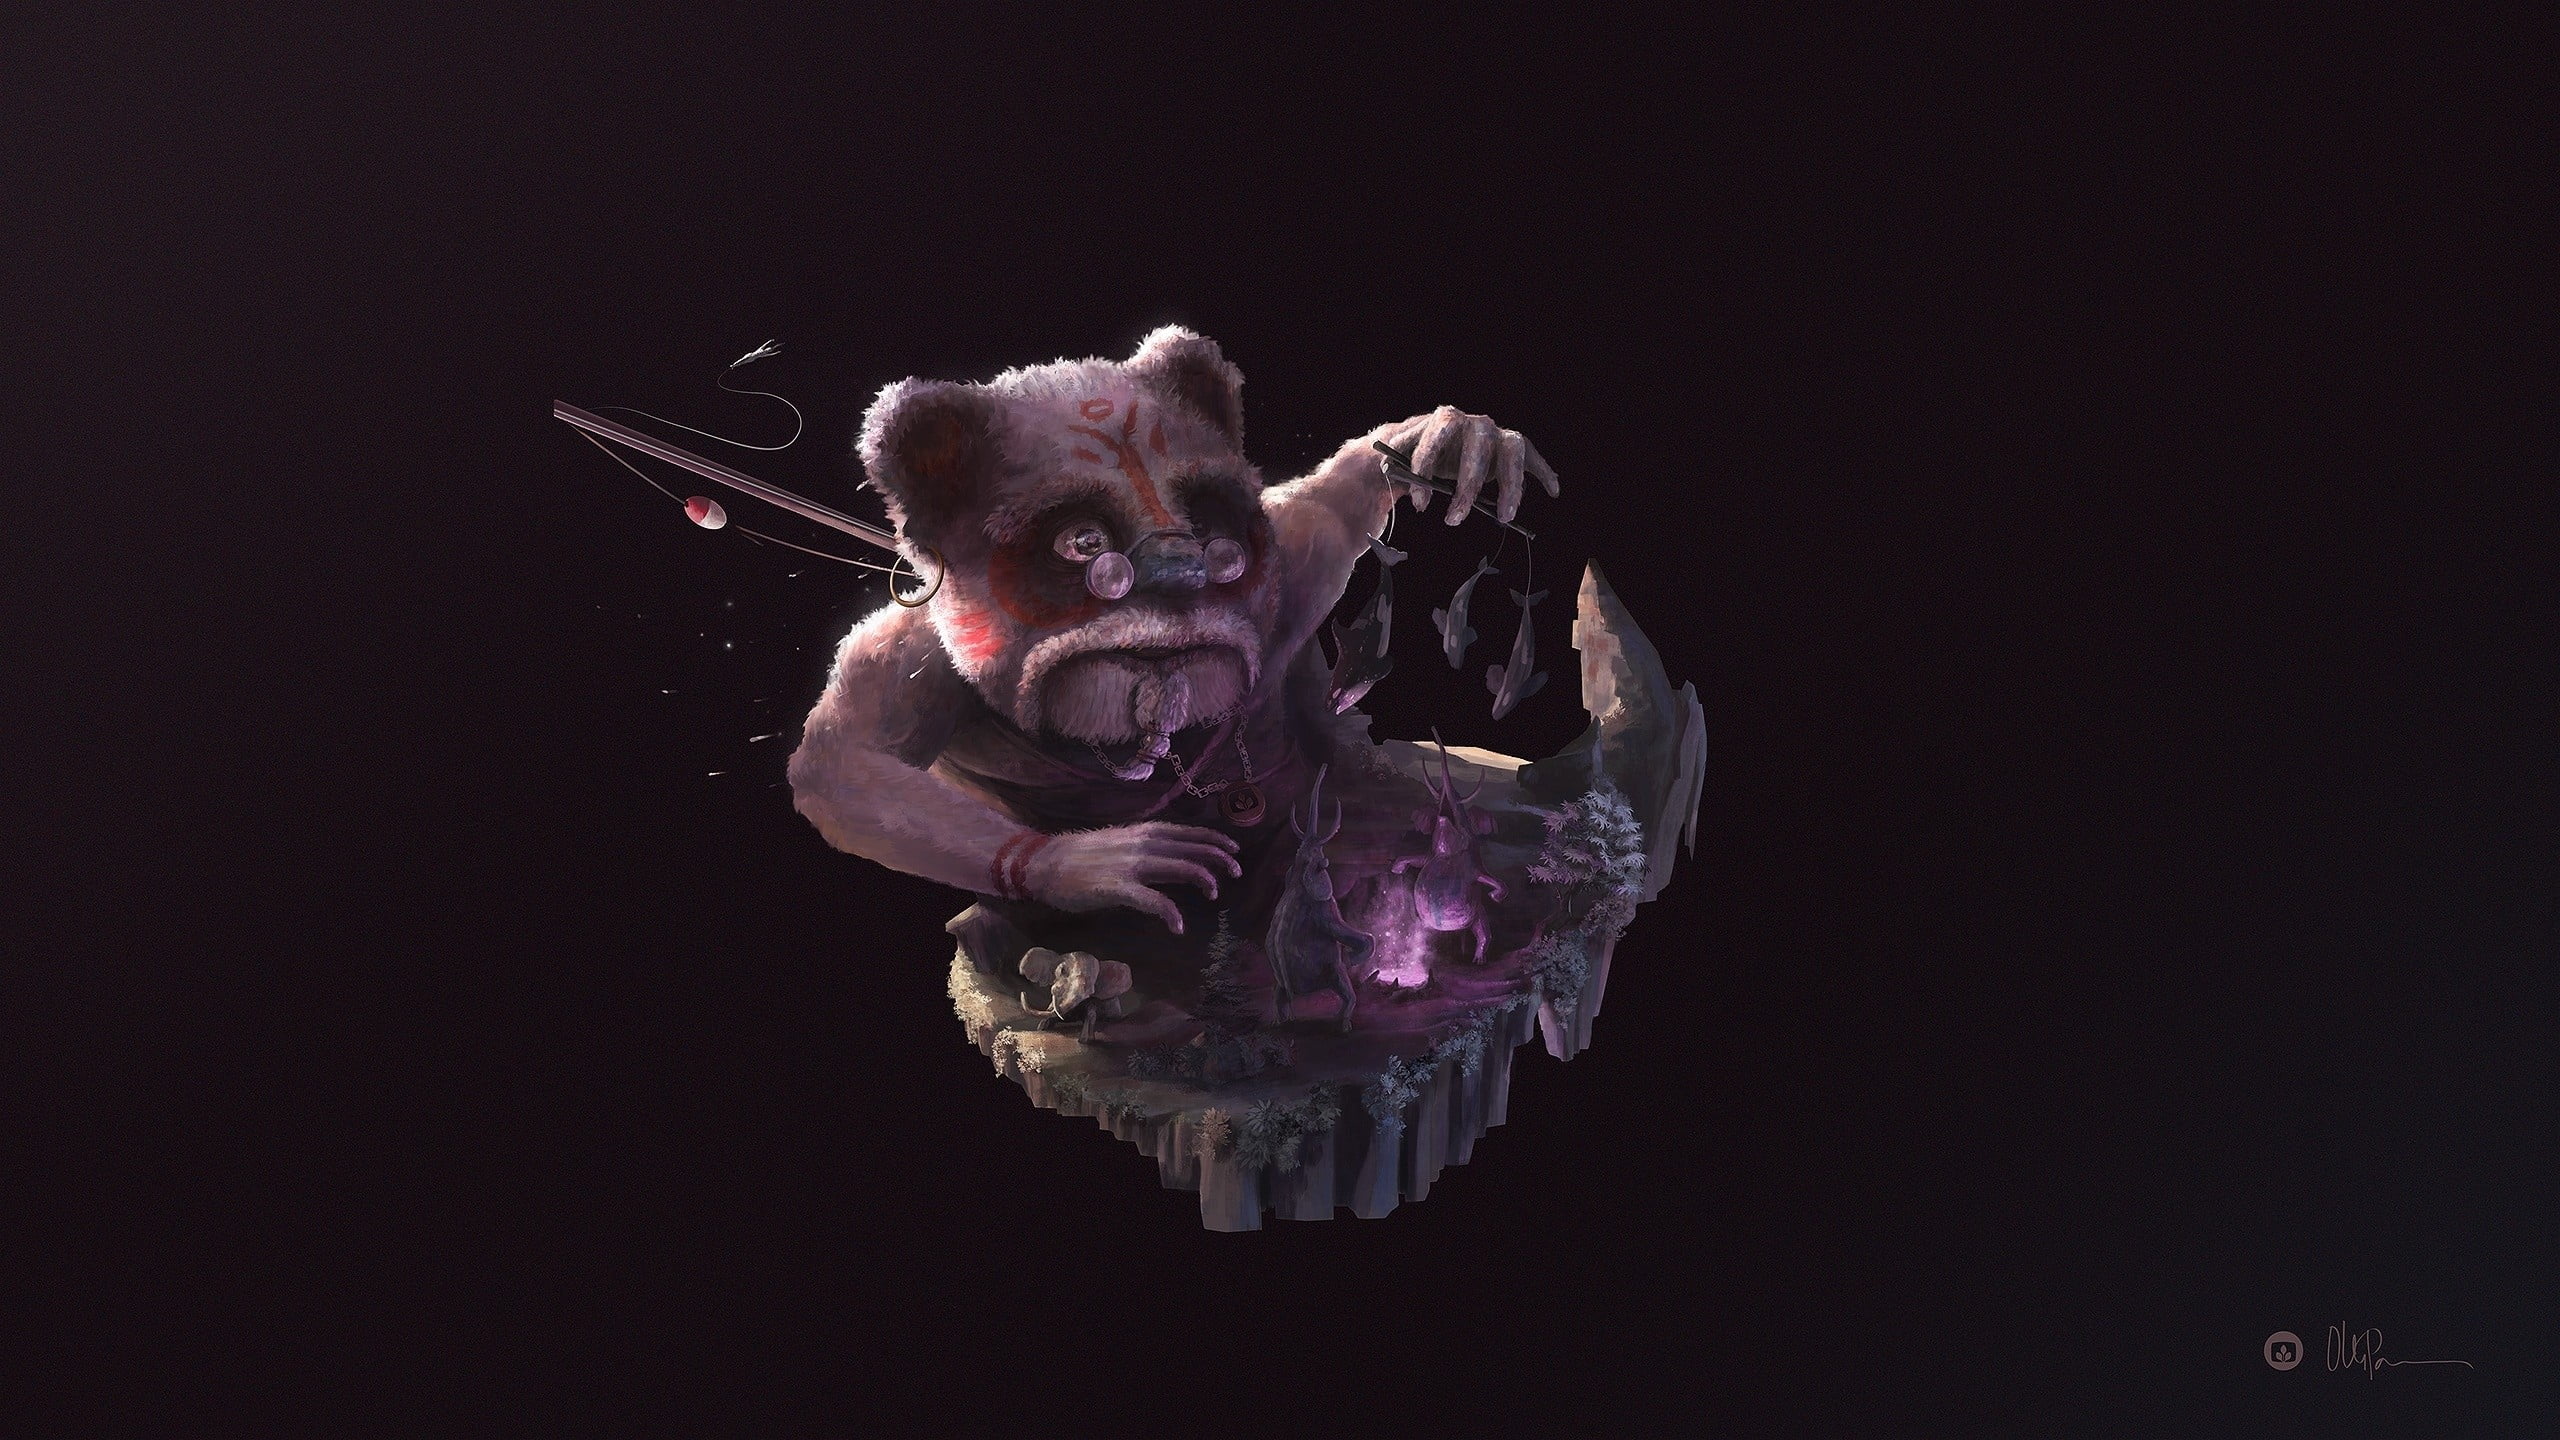 brown bear illustration, Desktopography, teddy bears, digital art